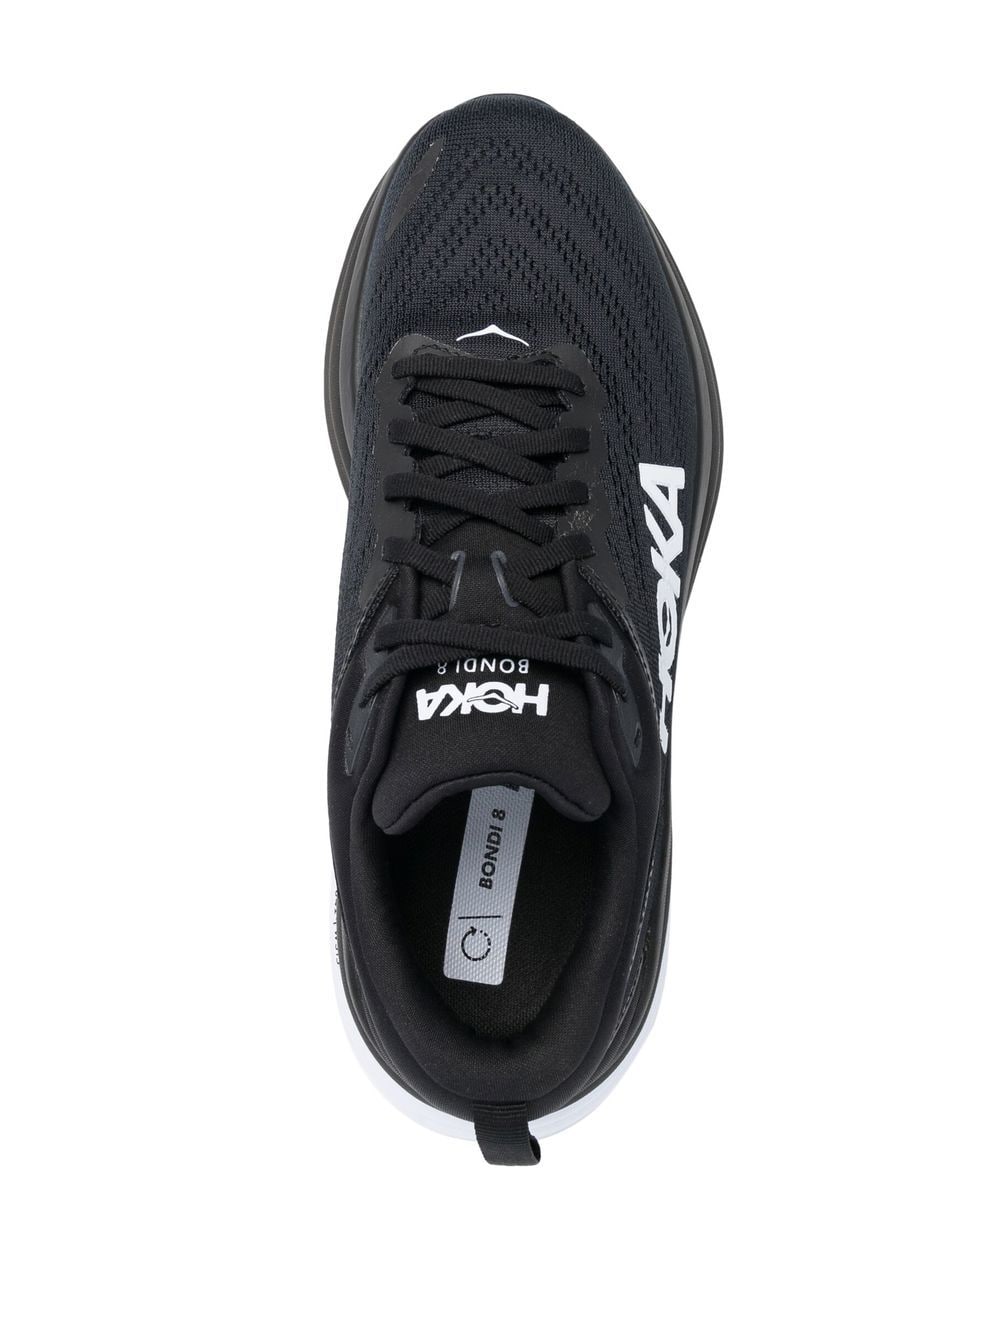 Bondi 8 logo-print lace-up sneakers<BR/><BR/><BR/>